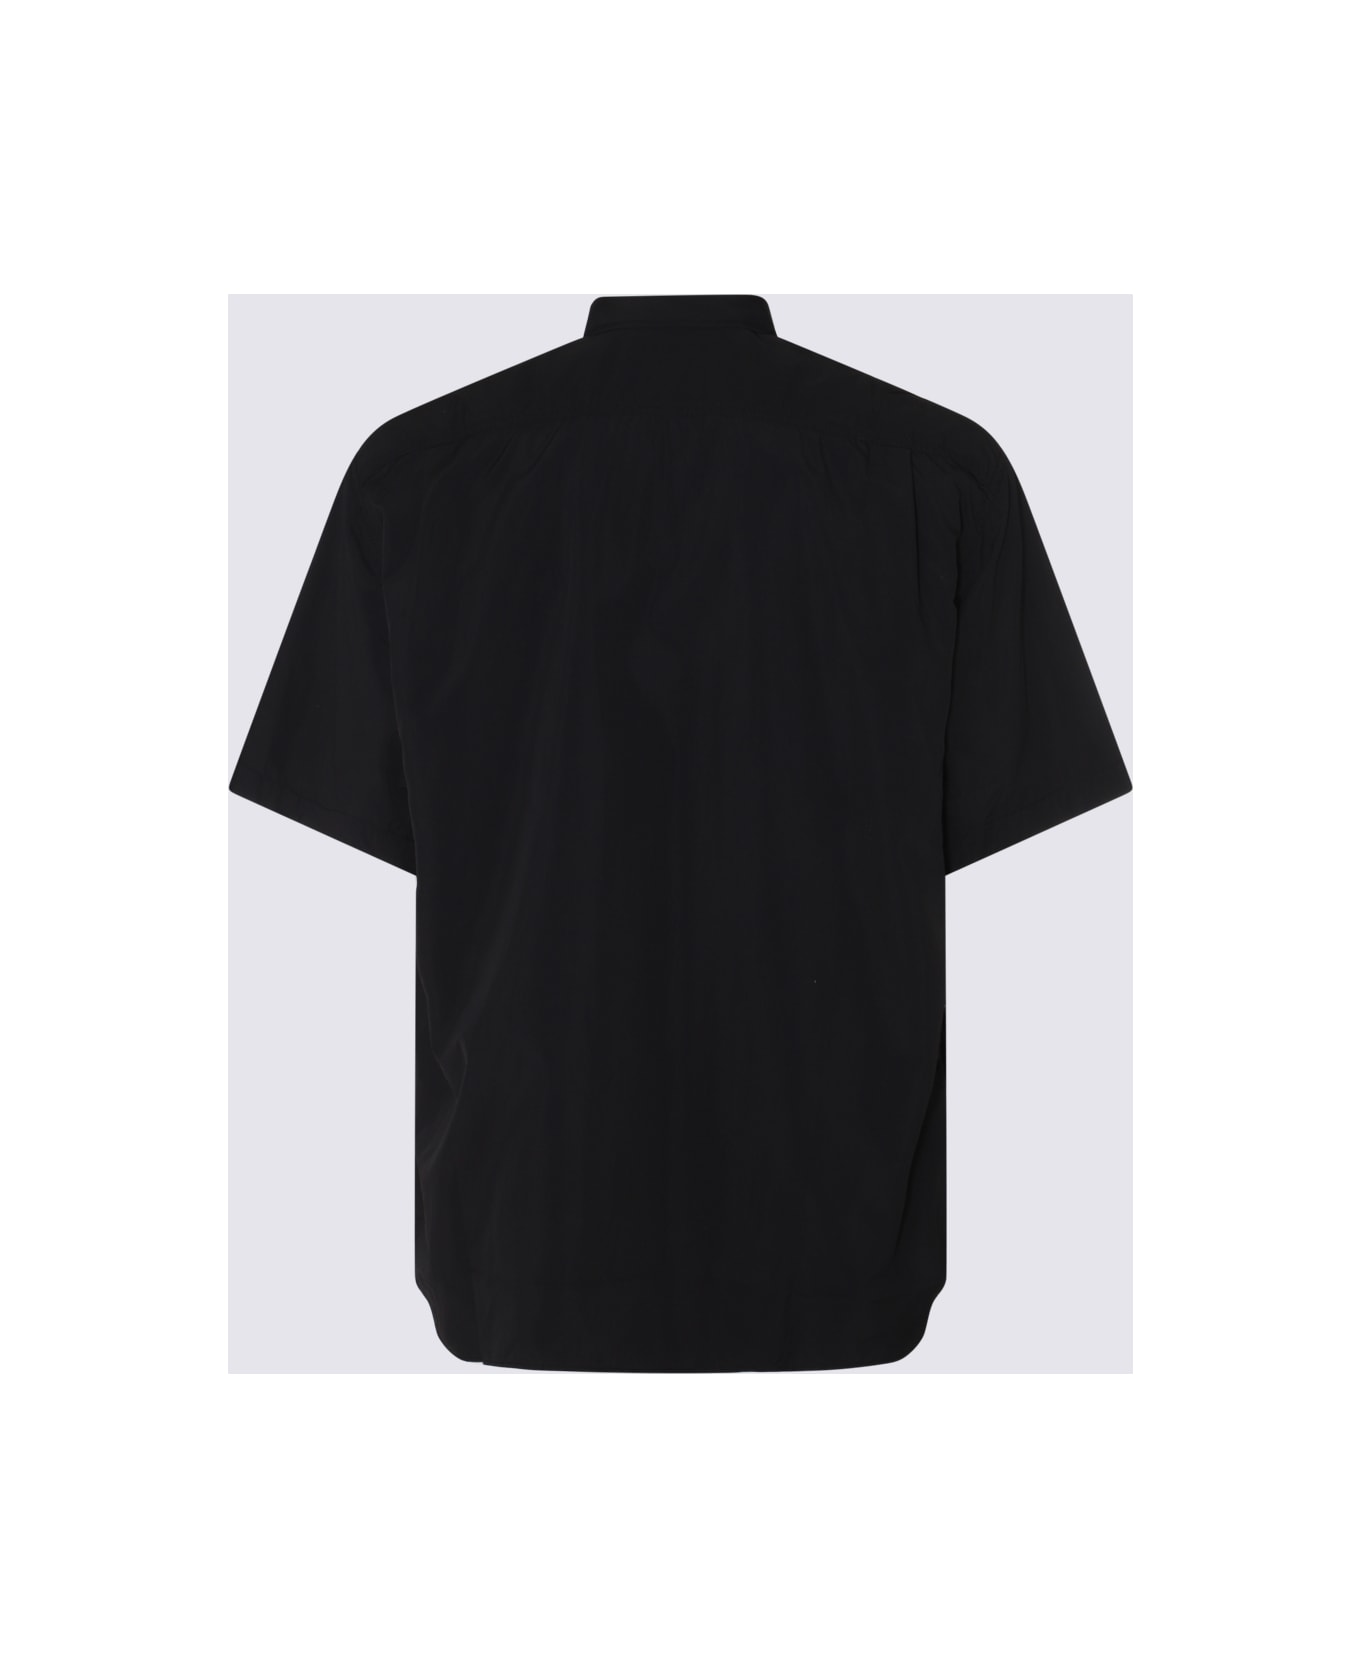 Comme des Garçons Homme Black Nylon Shirt - Black シャツ